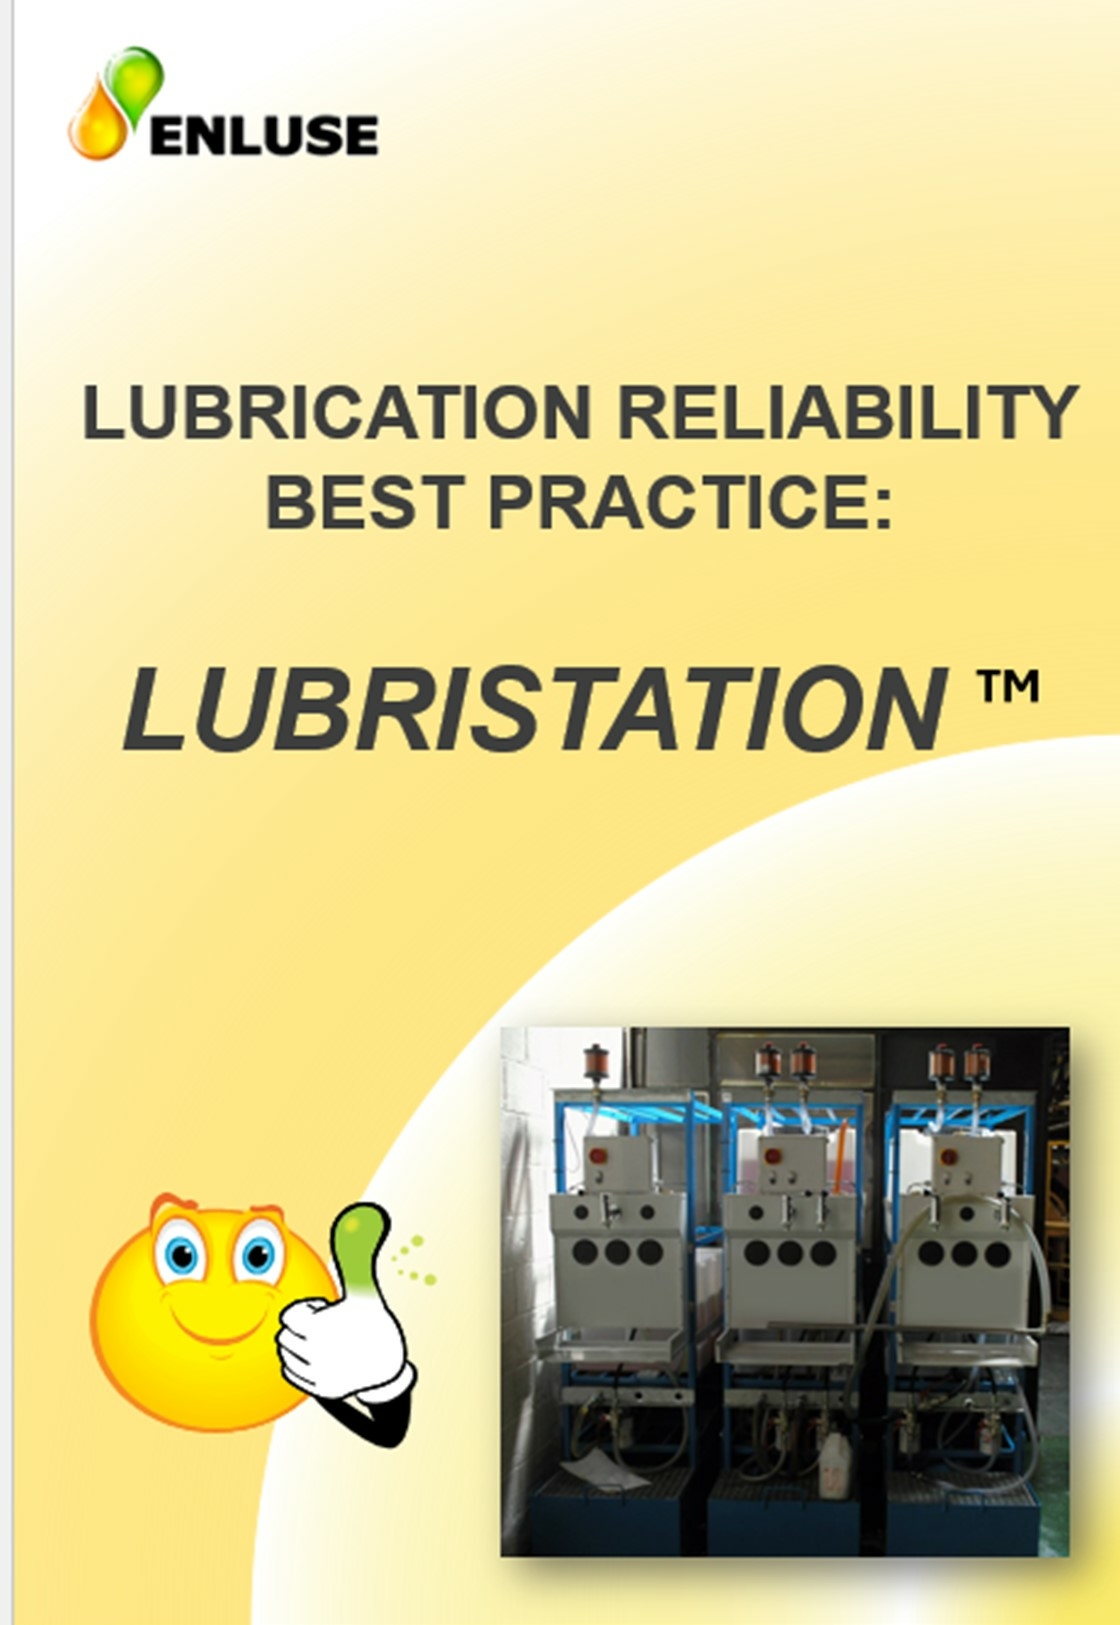 Lubristation Storage Systems custom made units